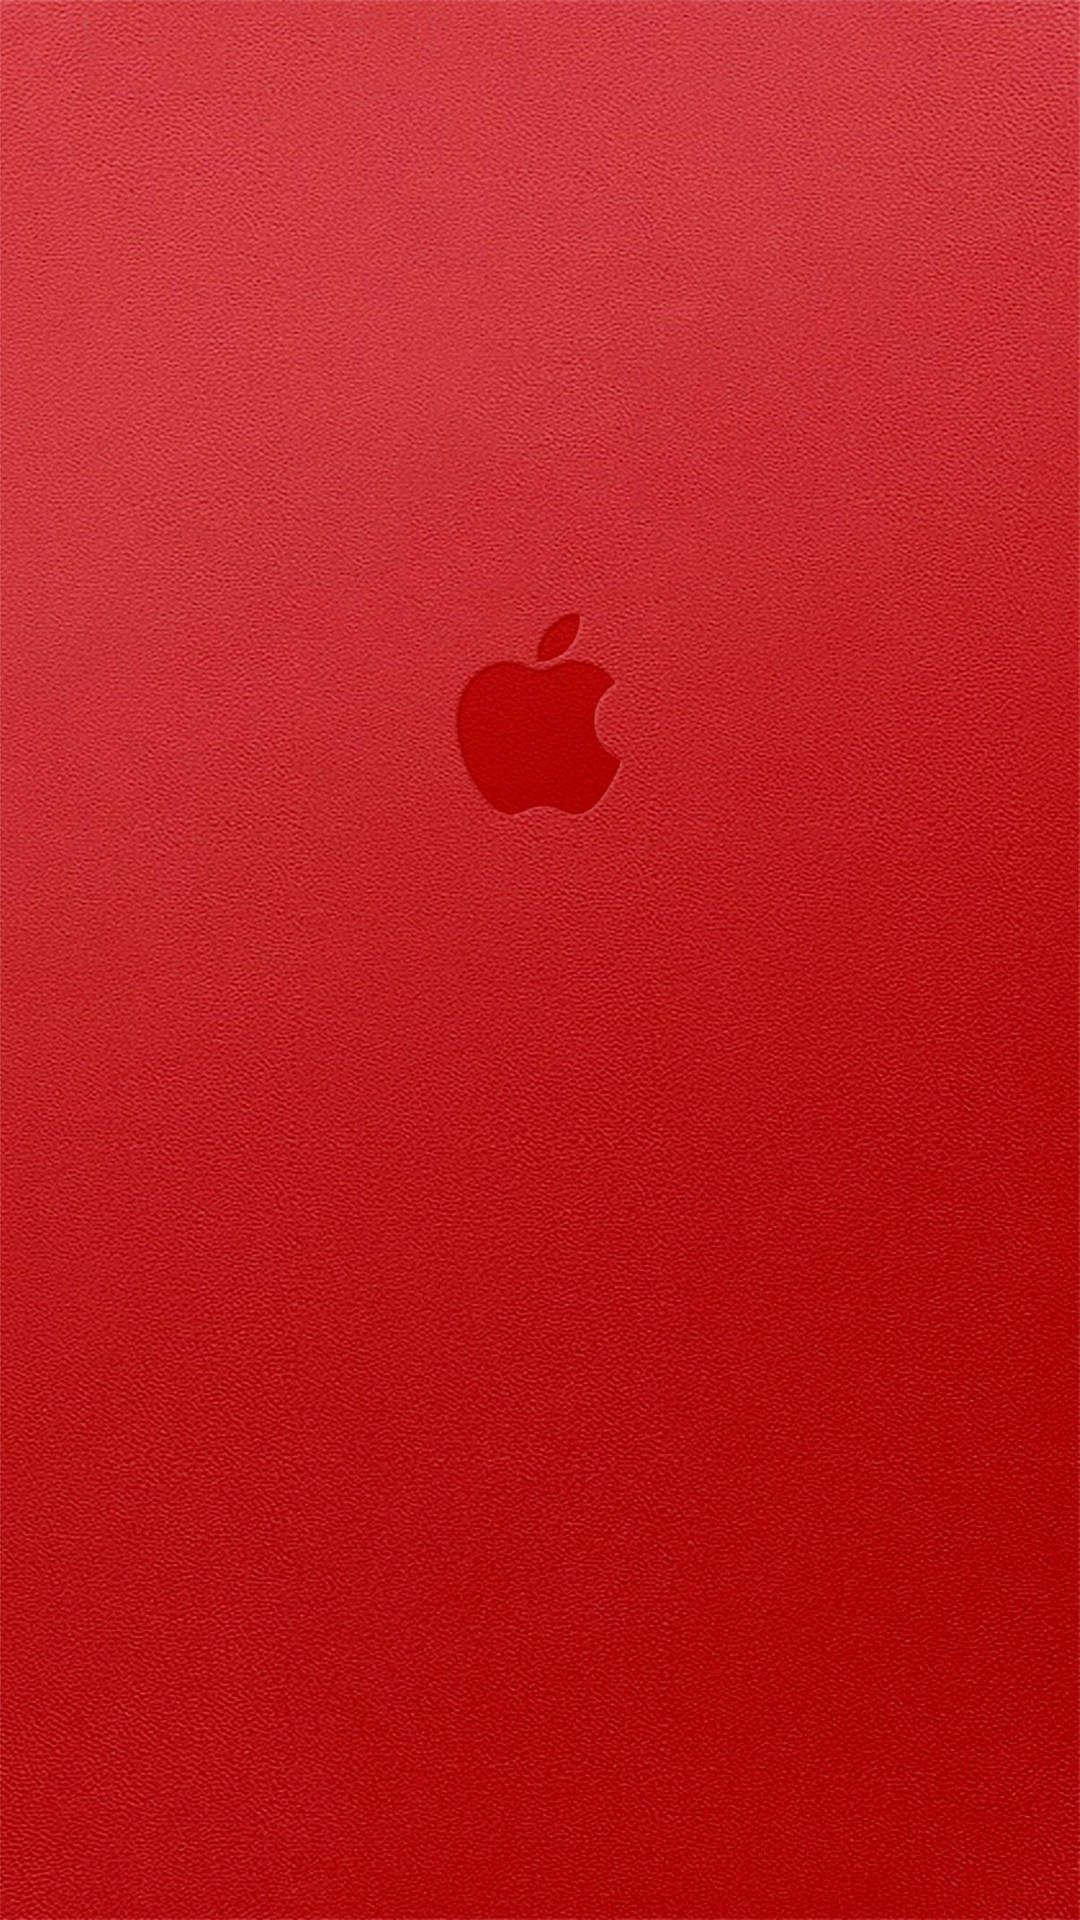 Original Apple Logo På Rød Tapet Til iPhone X Wallpaper